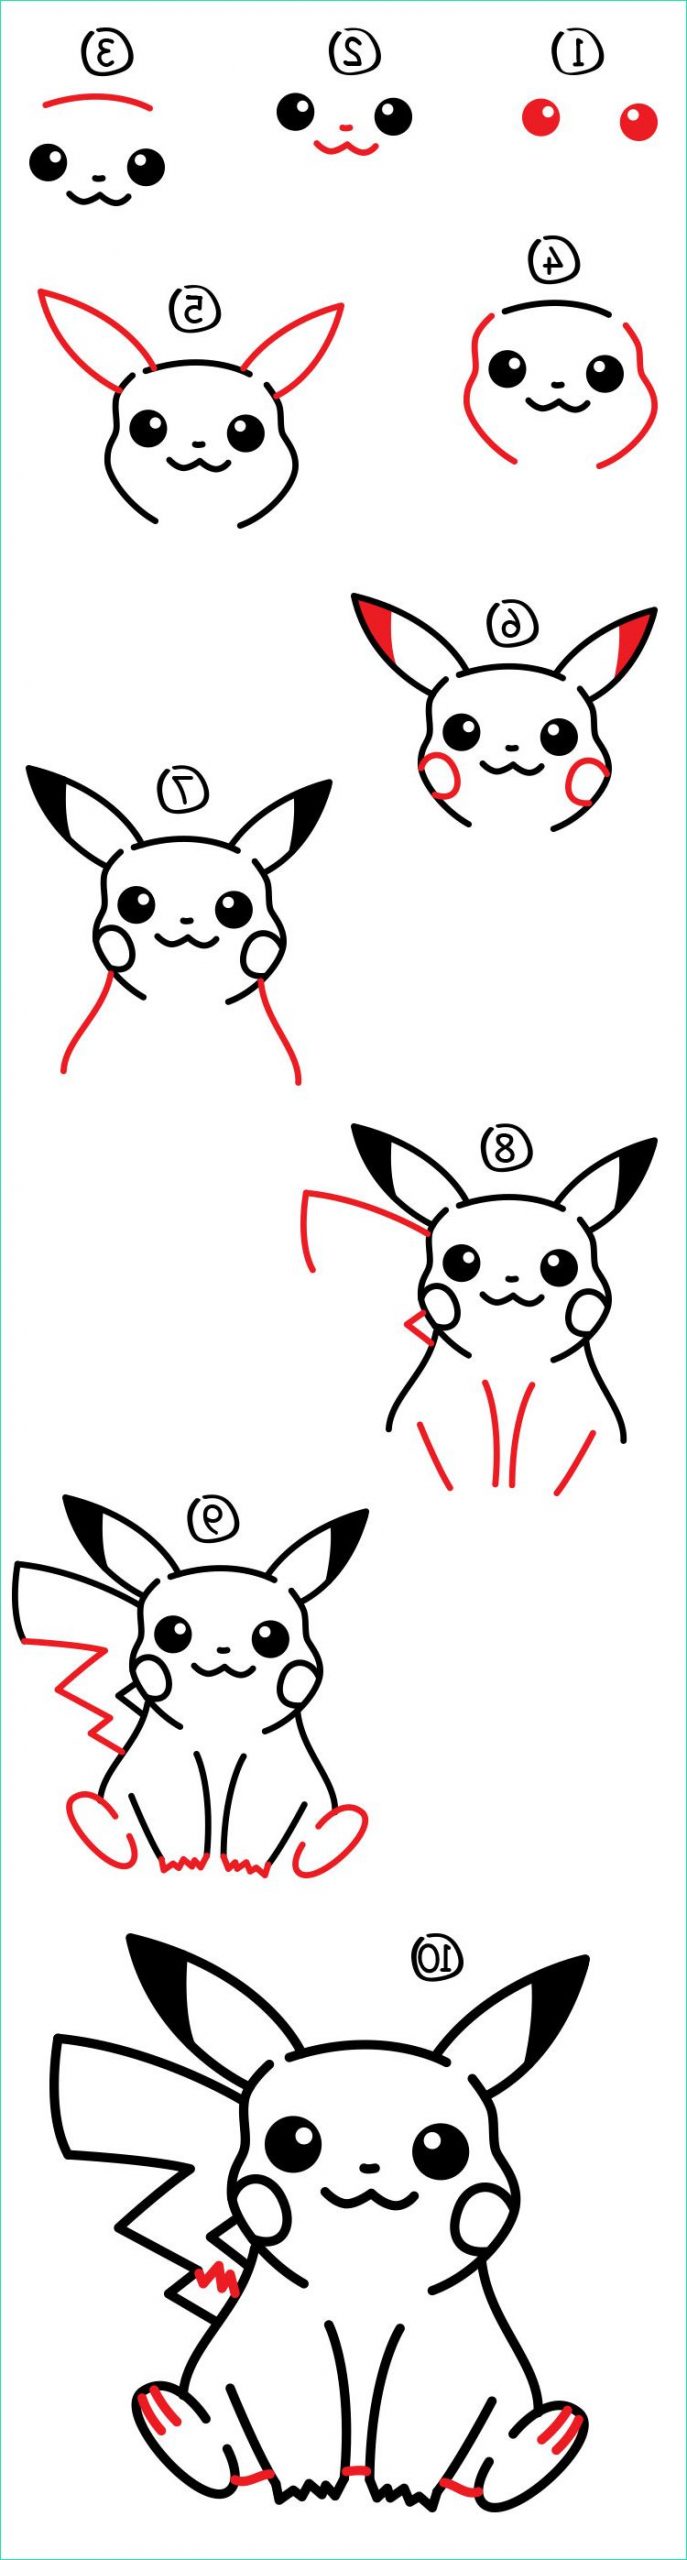 Dessins Pikachu Cool Image How to Draw Pikachu Art for Kids Hub